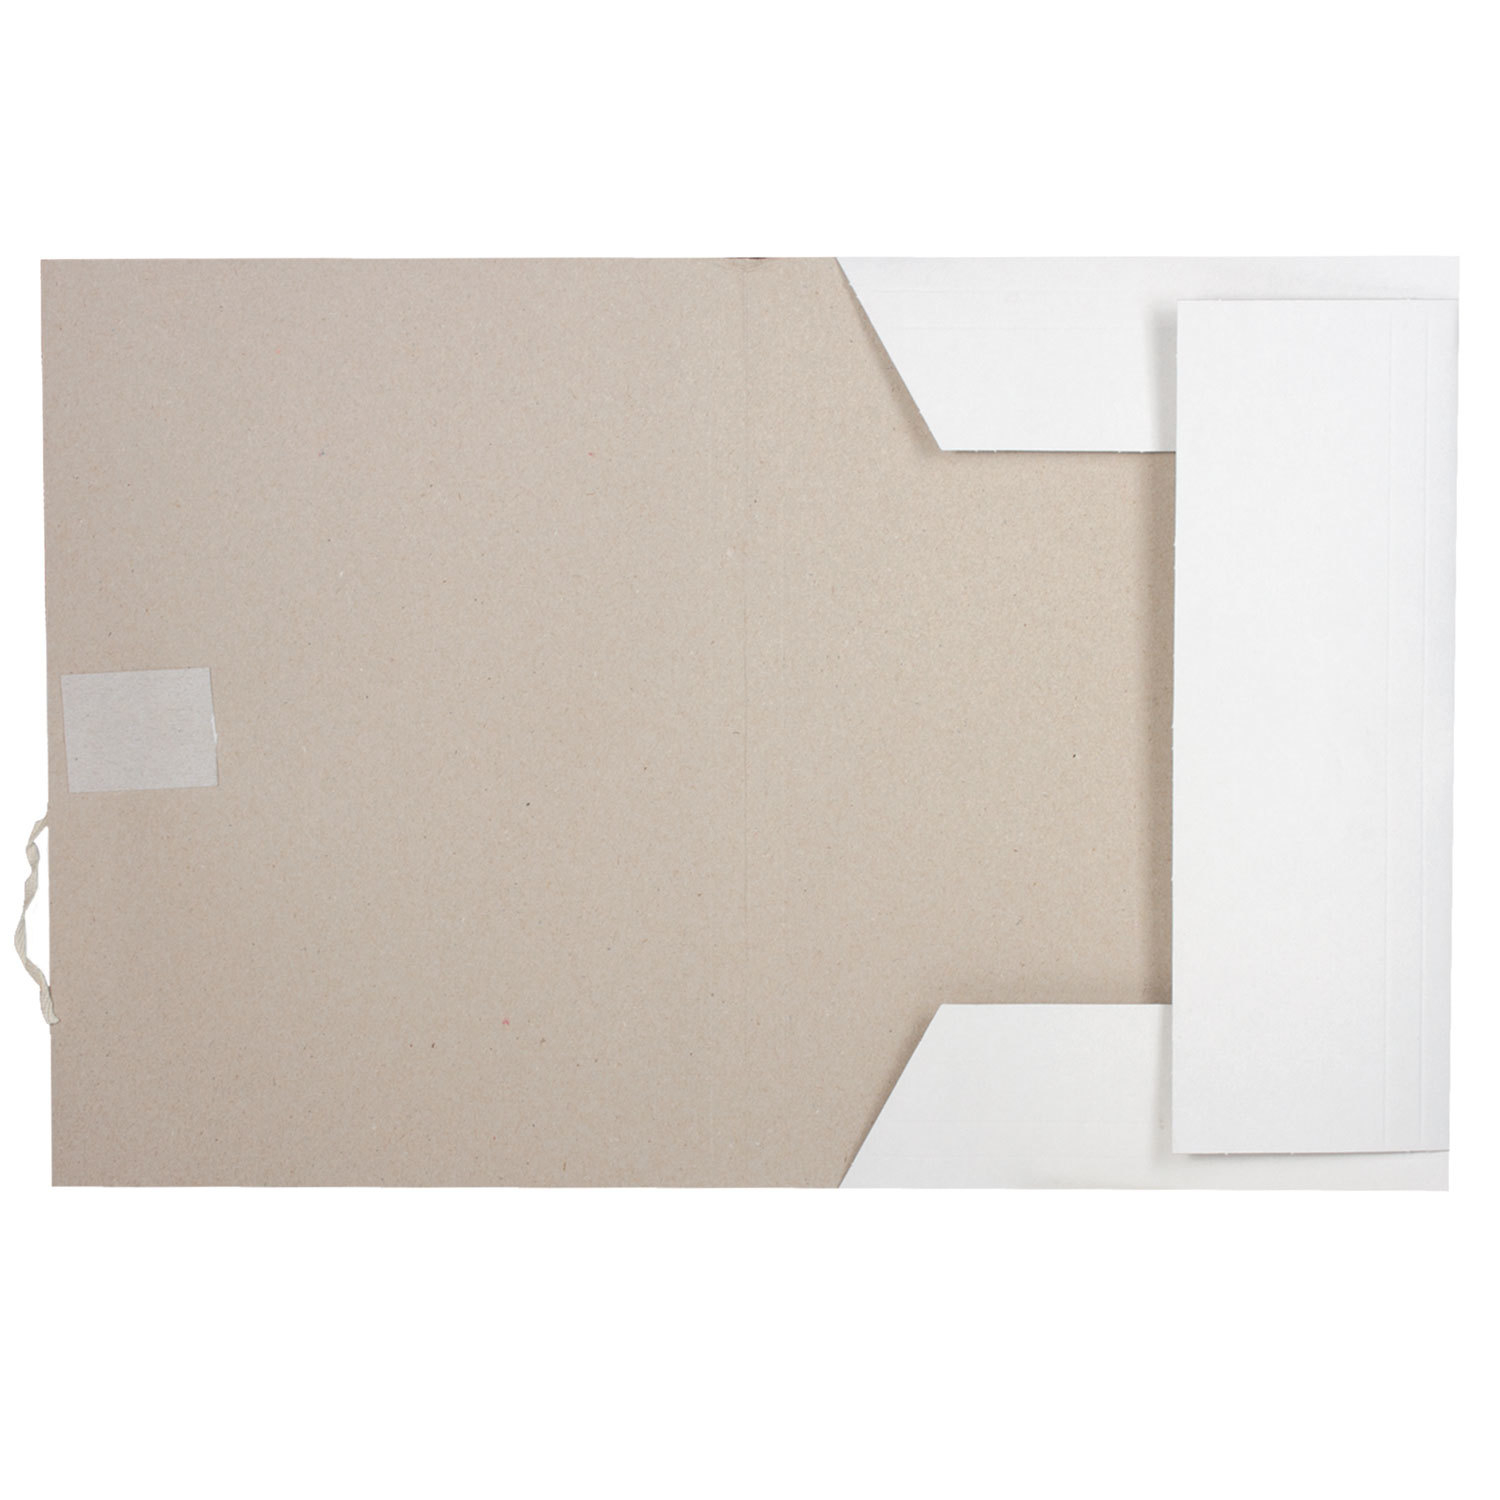 Папка д/бумаг с завязками ОФИСМАГ, картонная, гарант. пл. 280г/кв.м. (на 200л)